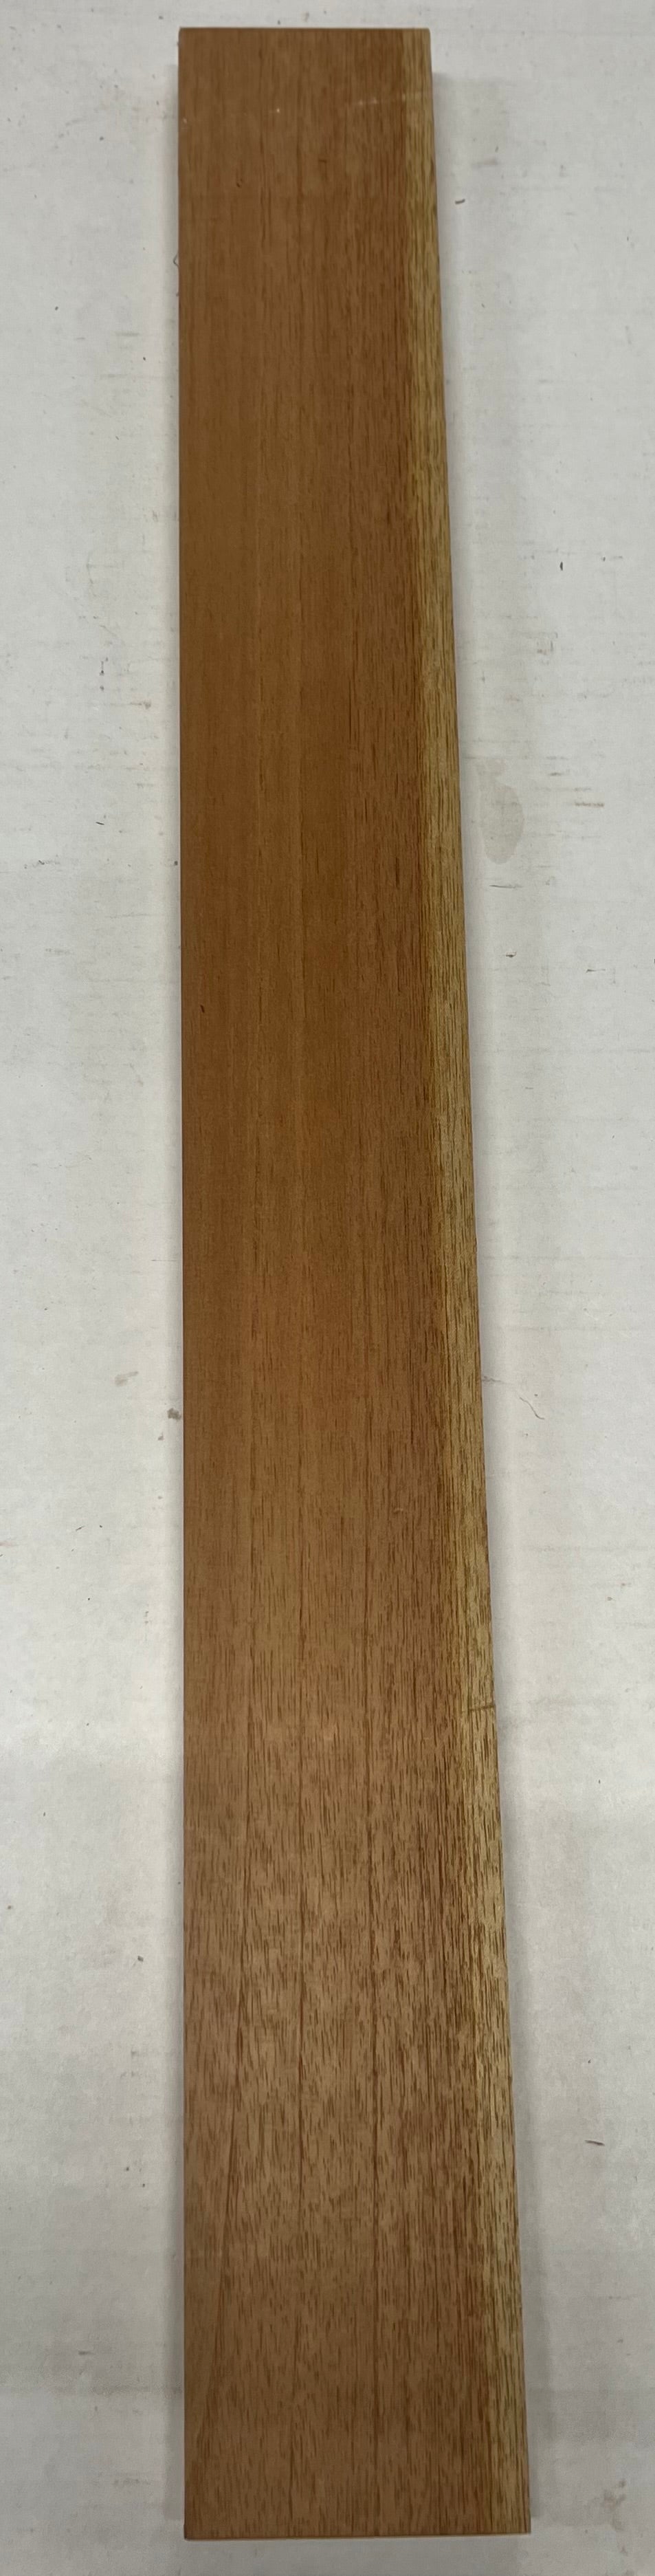 Spanish Cedar Thin Stock Three Dimensional Lumber Board 36&quot;x4&quot;x7/8&quot; 